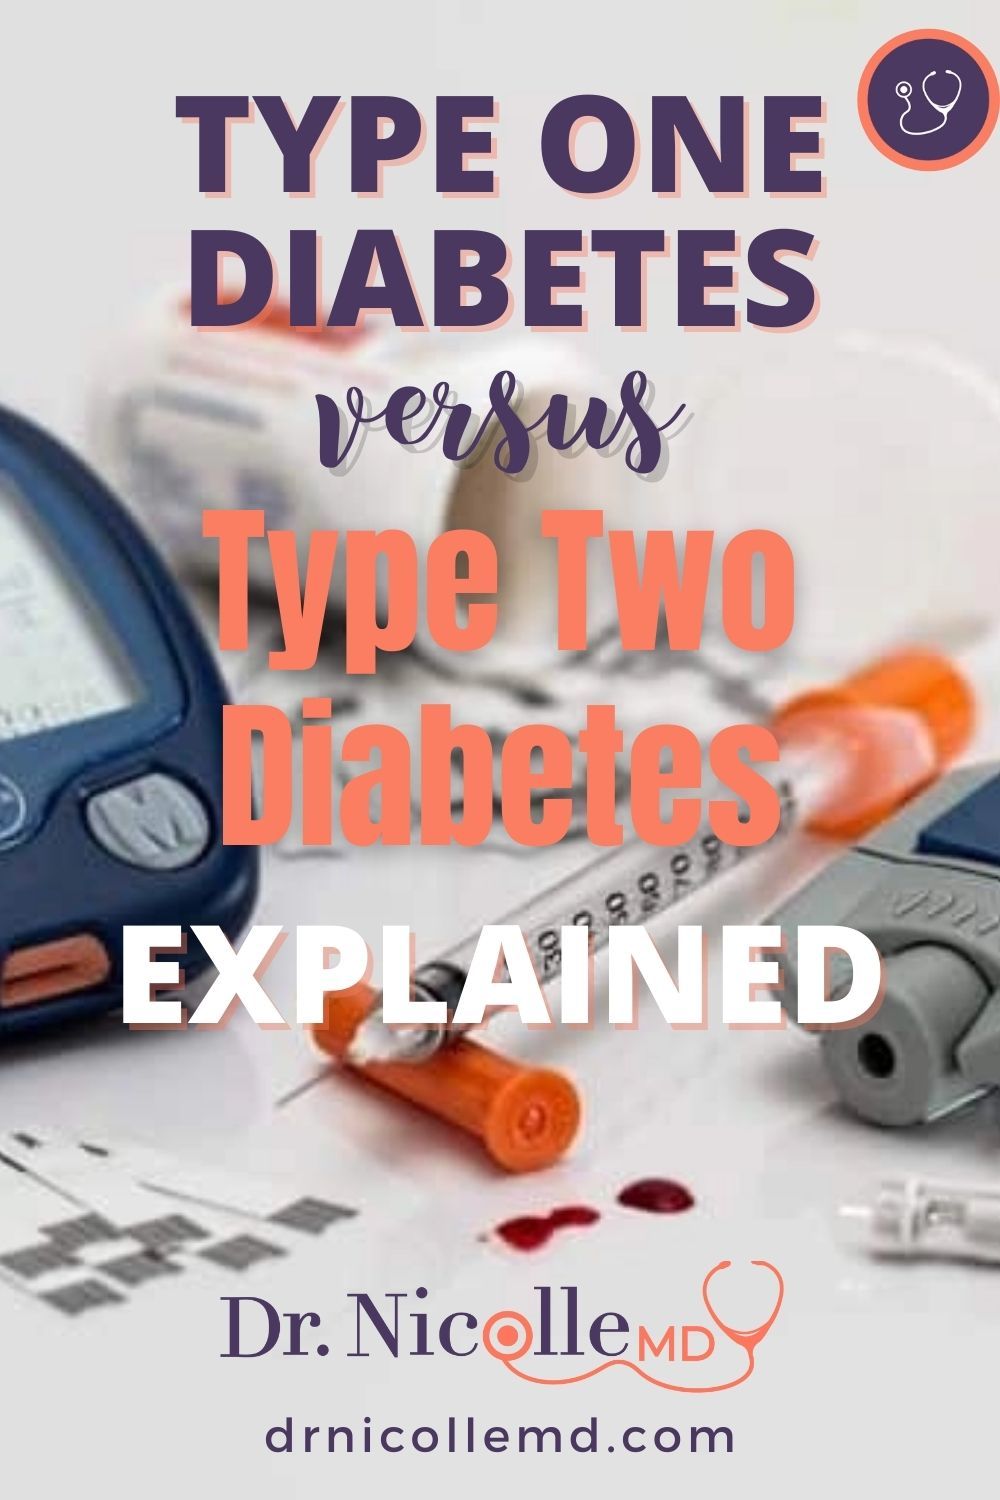 Type One Diabetes Versus Type Two Diabetes Explained